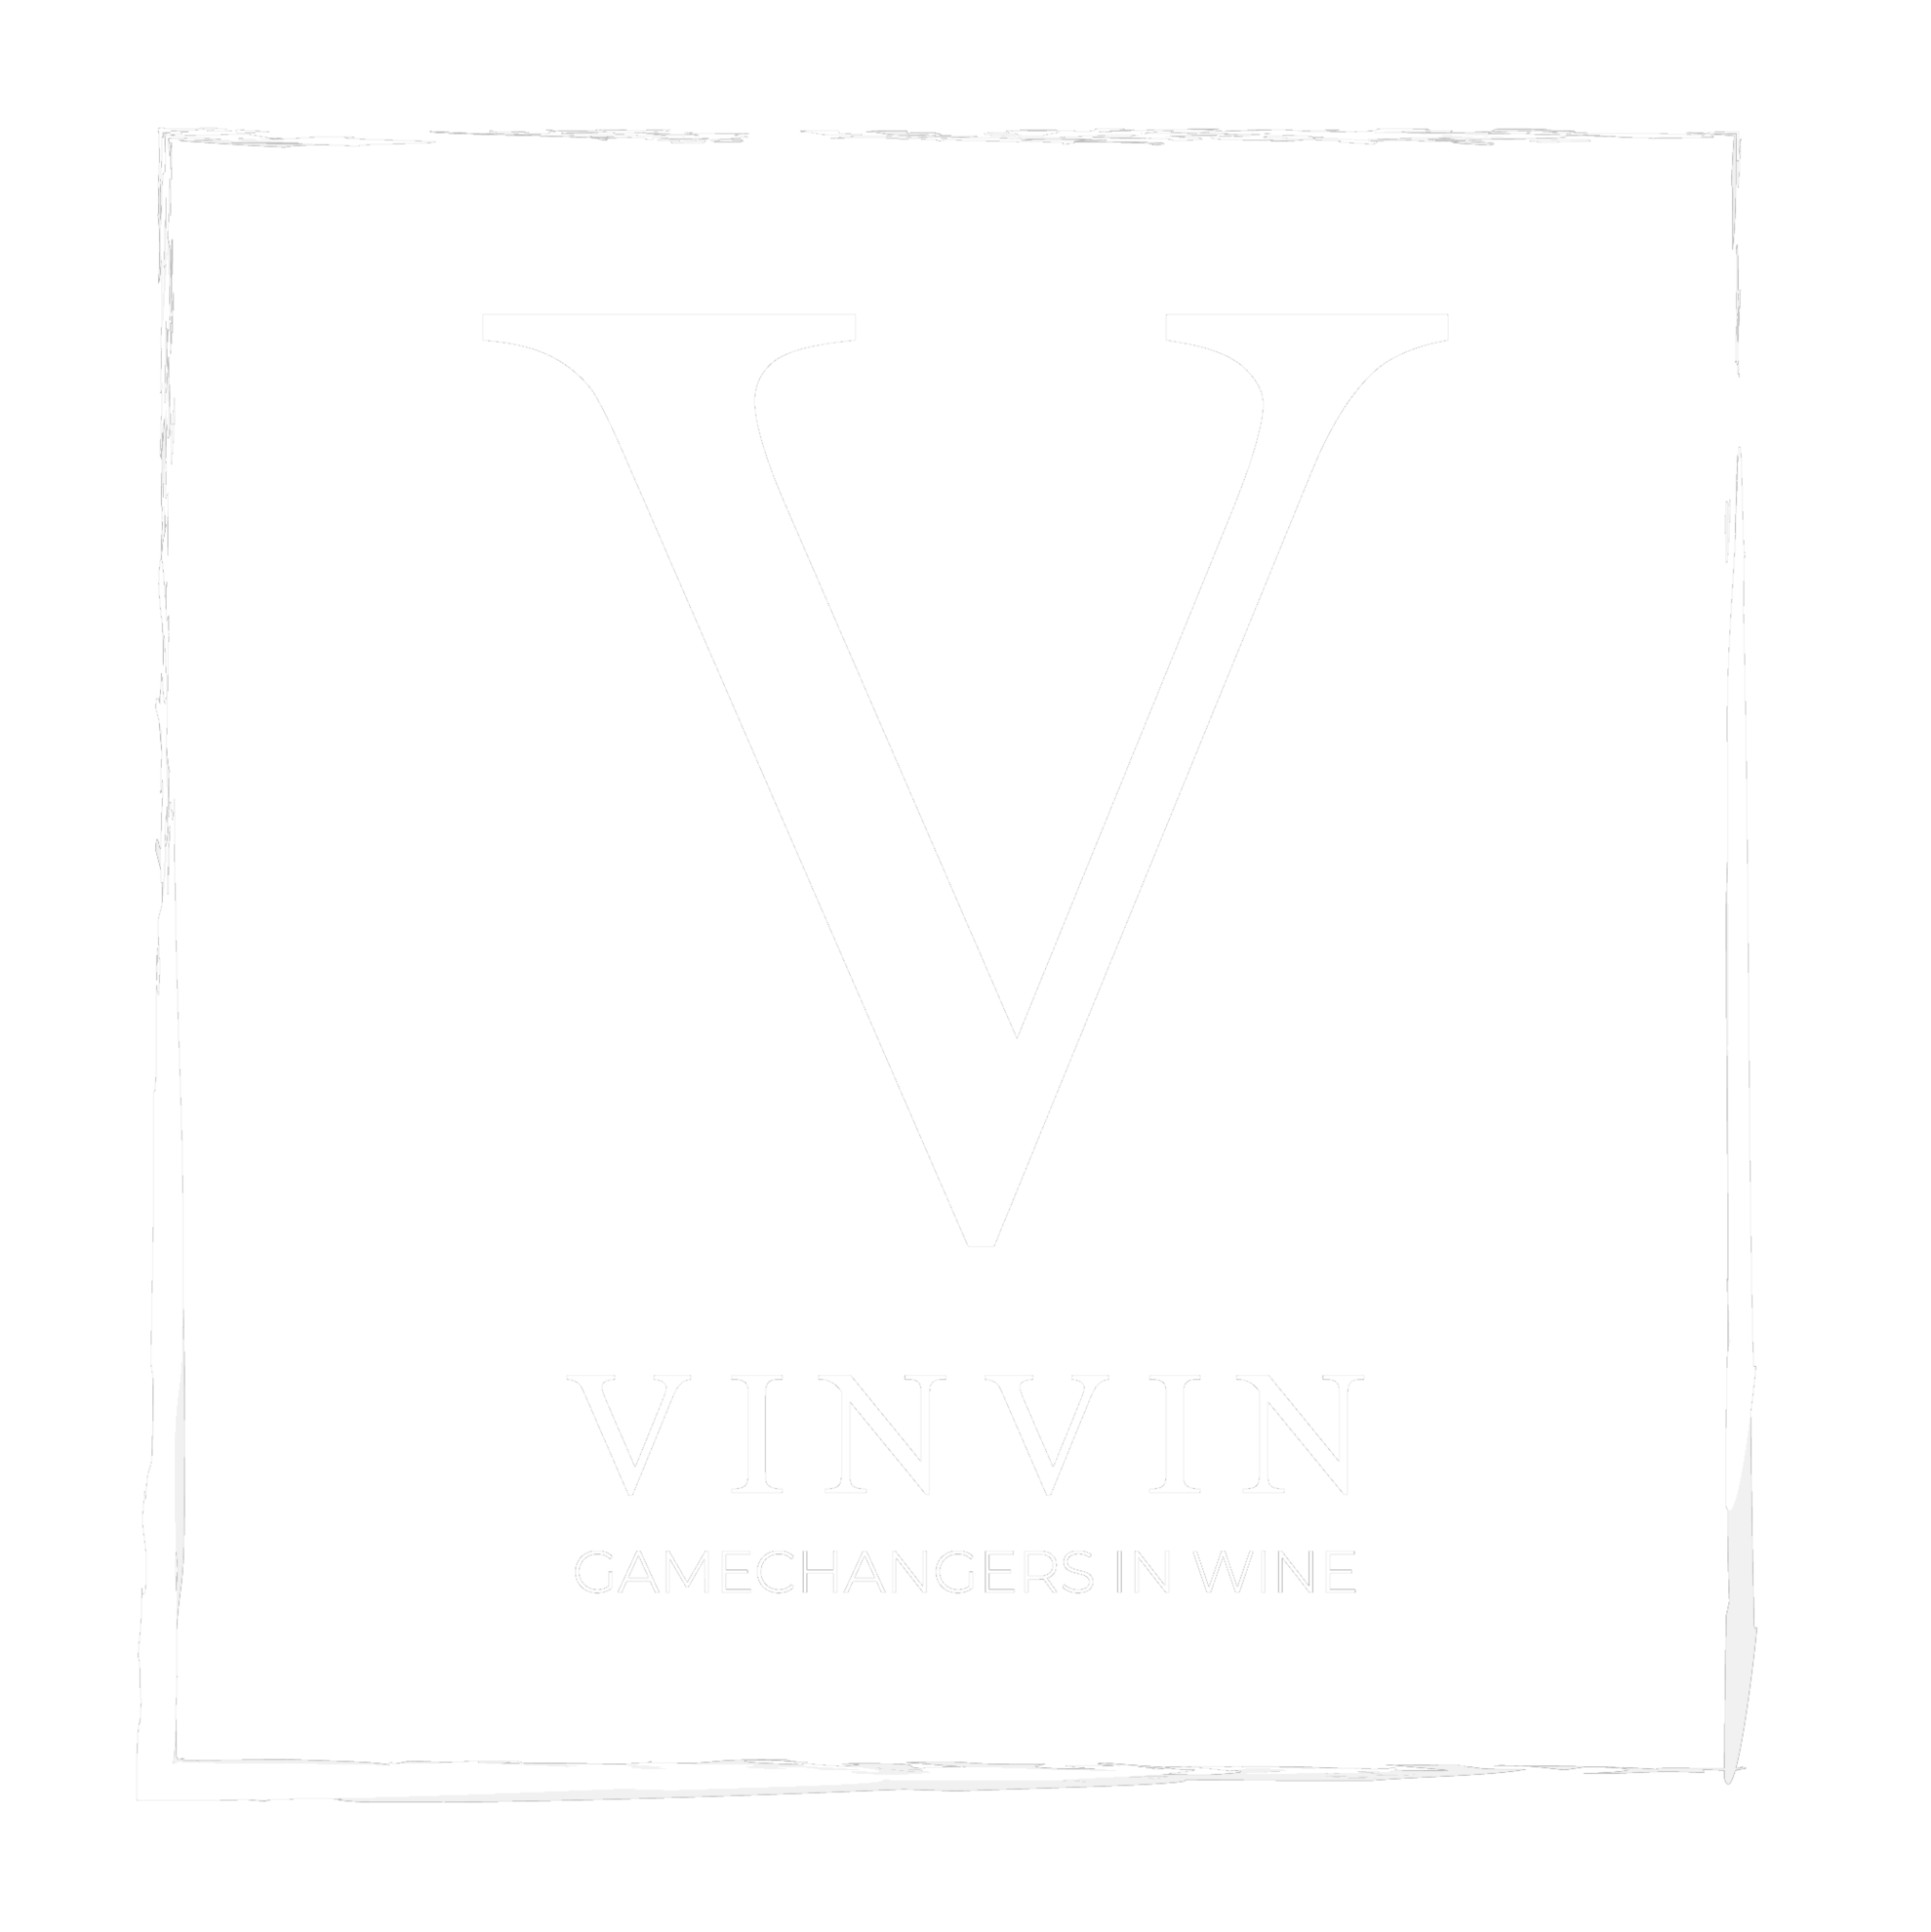 Logo Bon Vivant